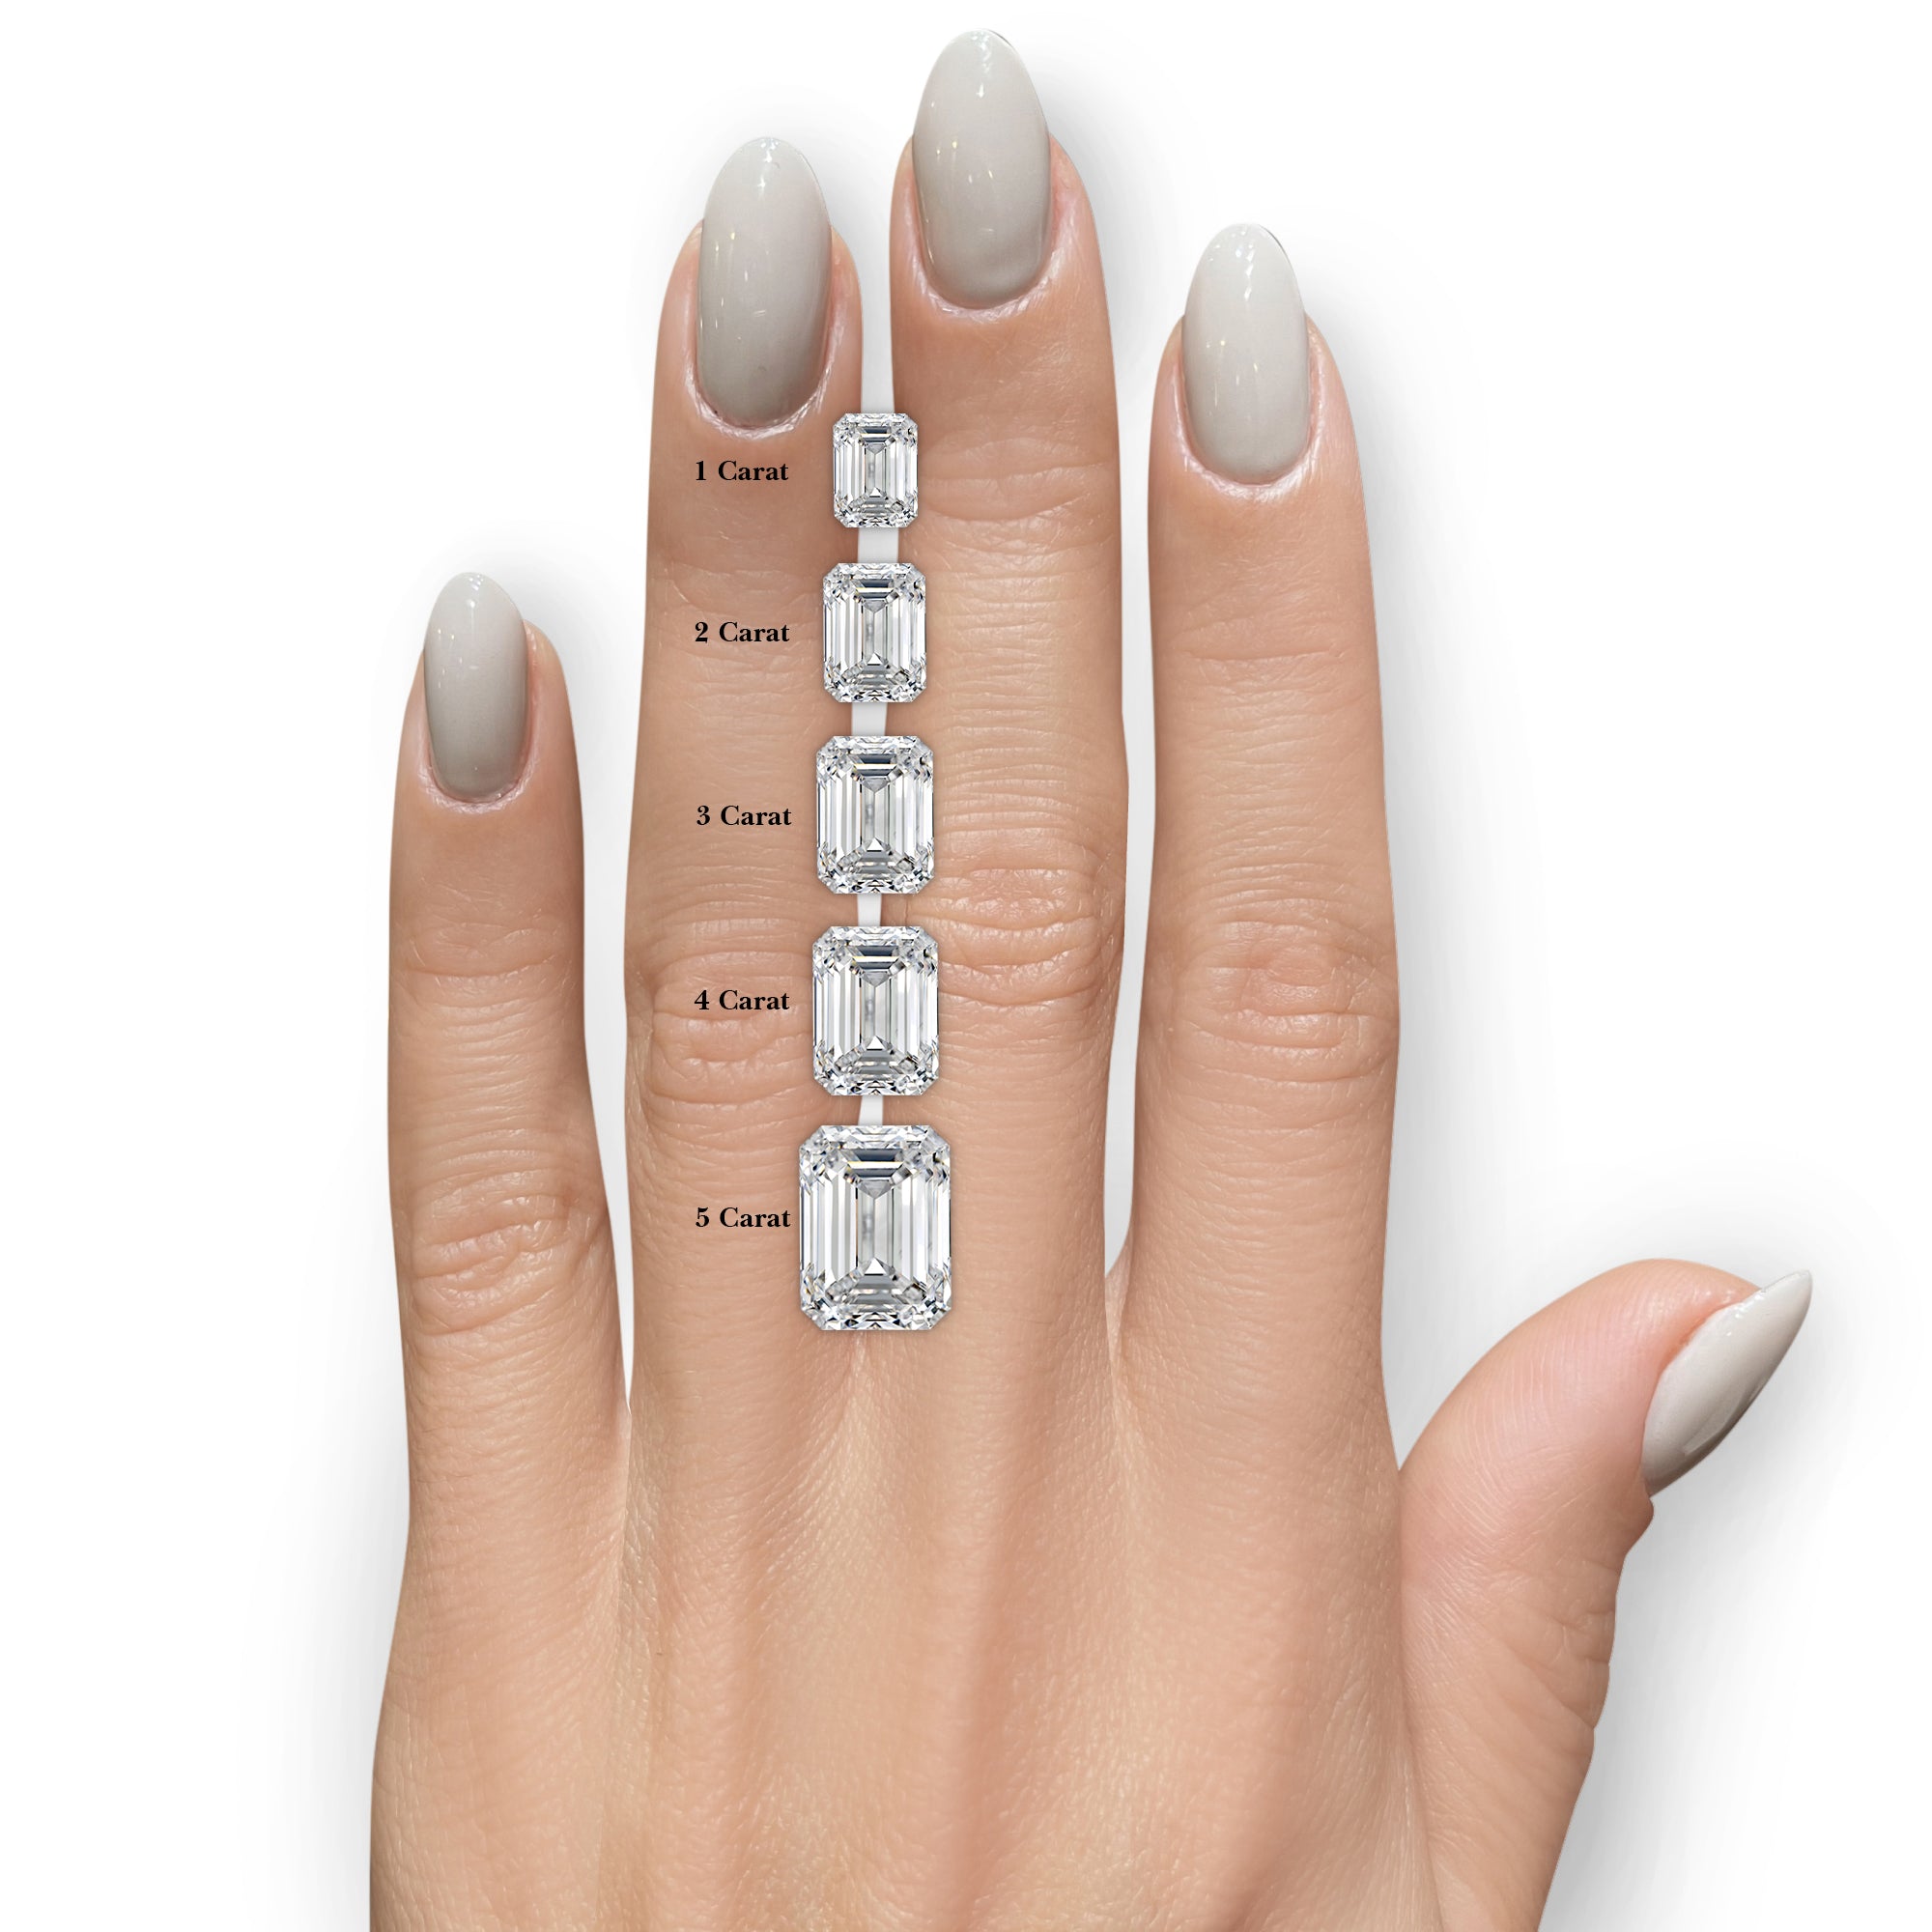 Kamala Diamond Engagement Ring -14K Rose Gold